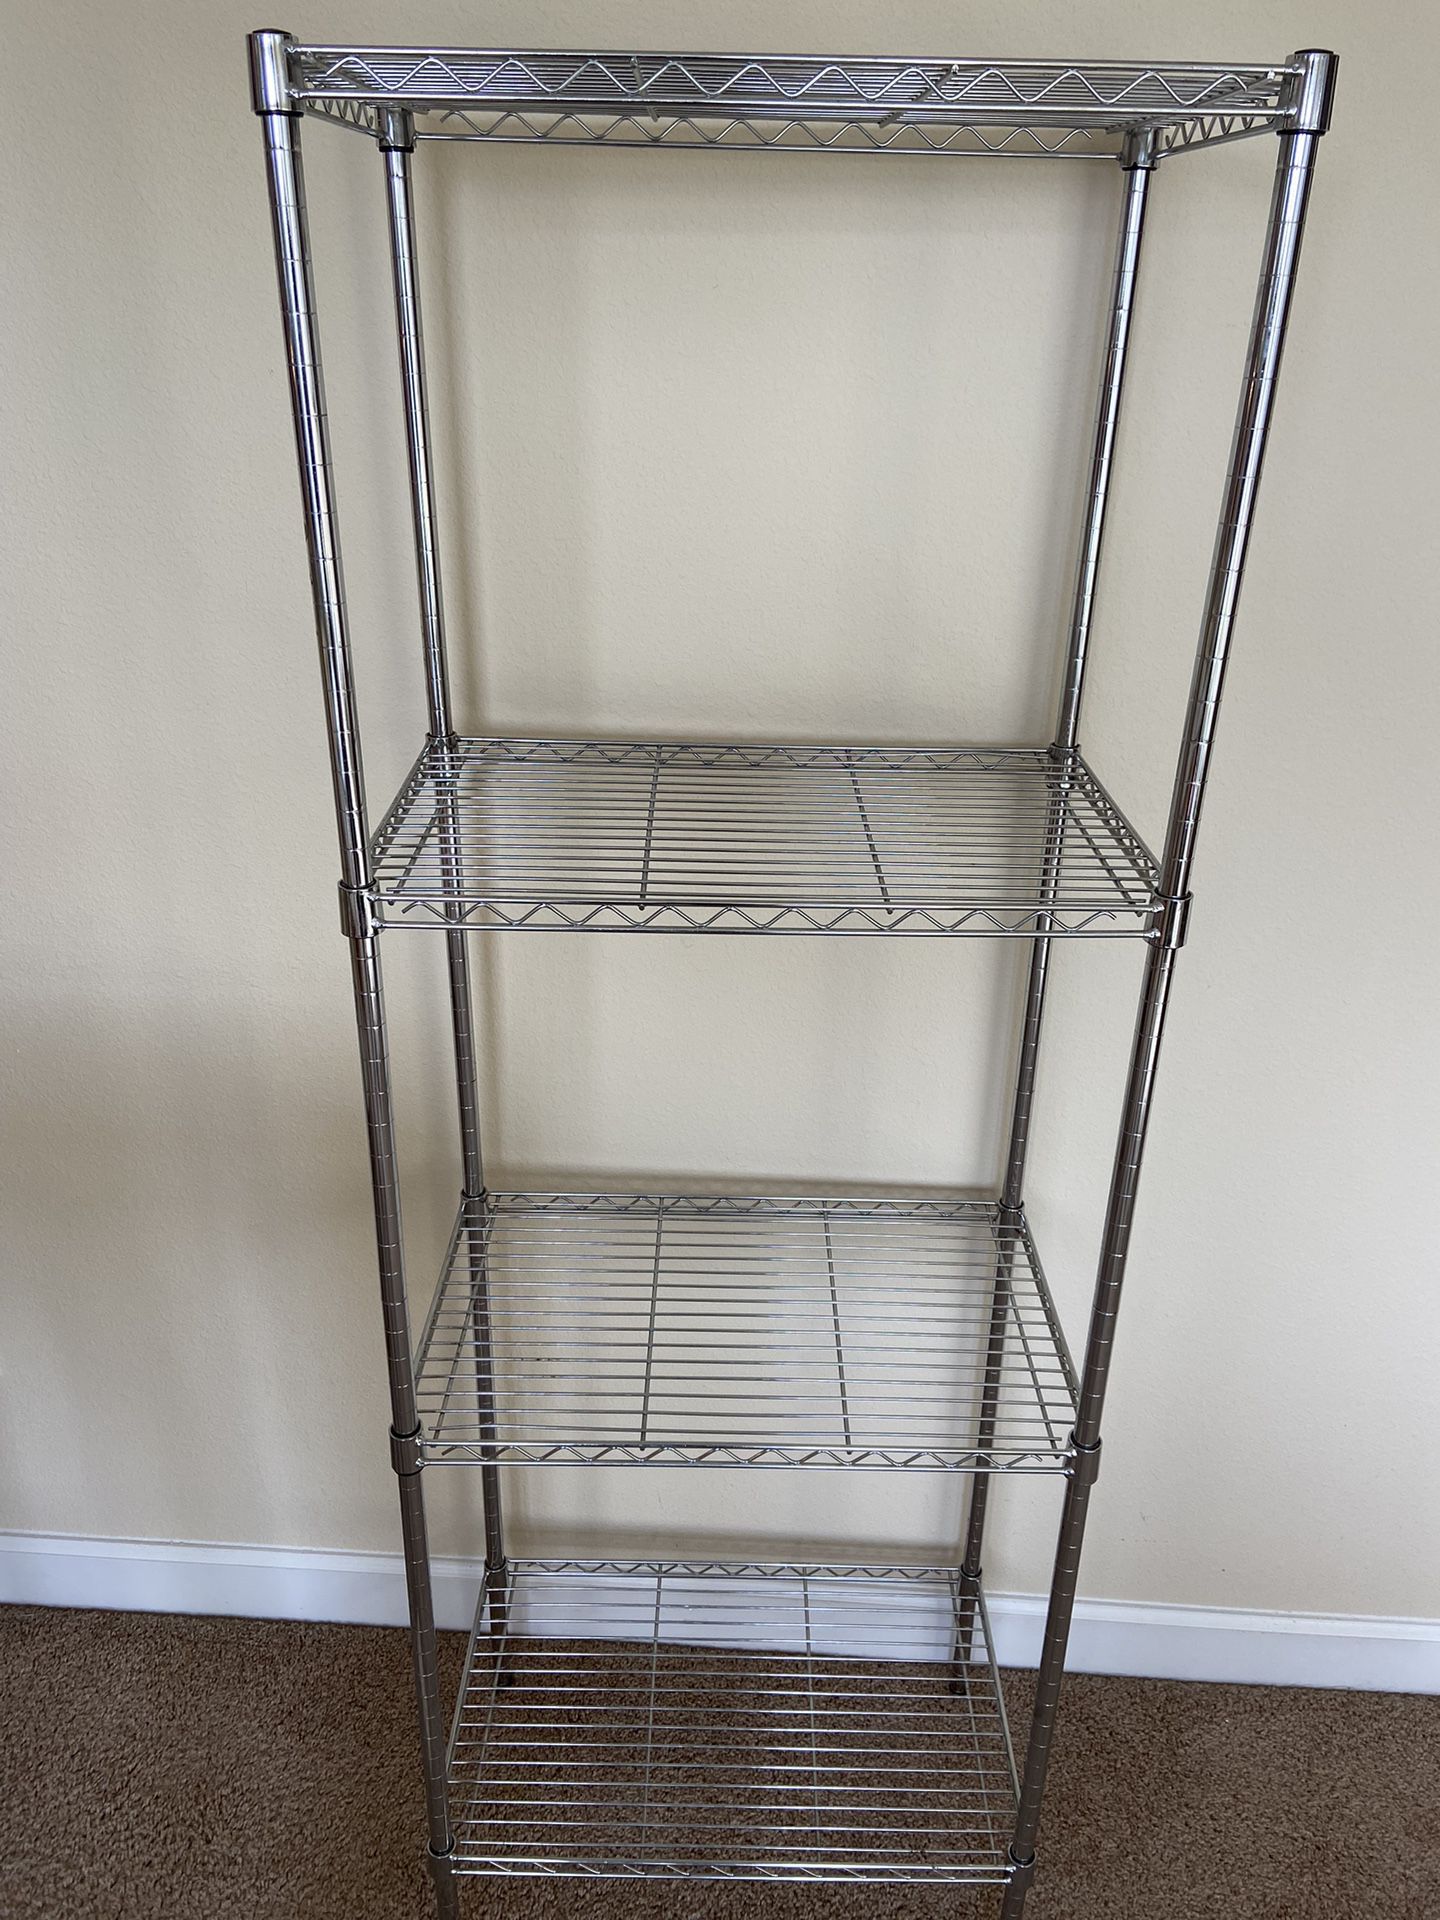 Chrome cage shelf, 4 adjustable shelves,